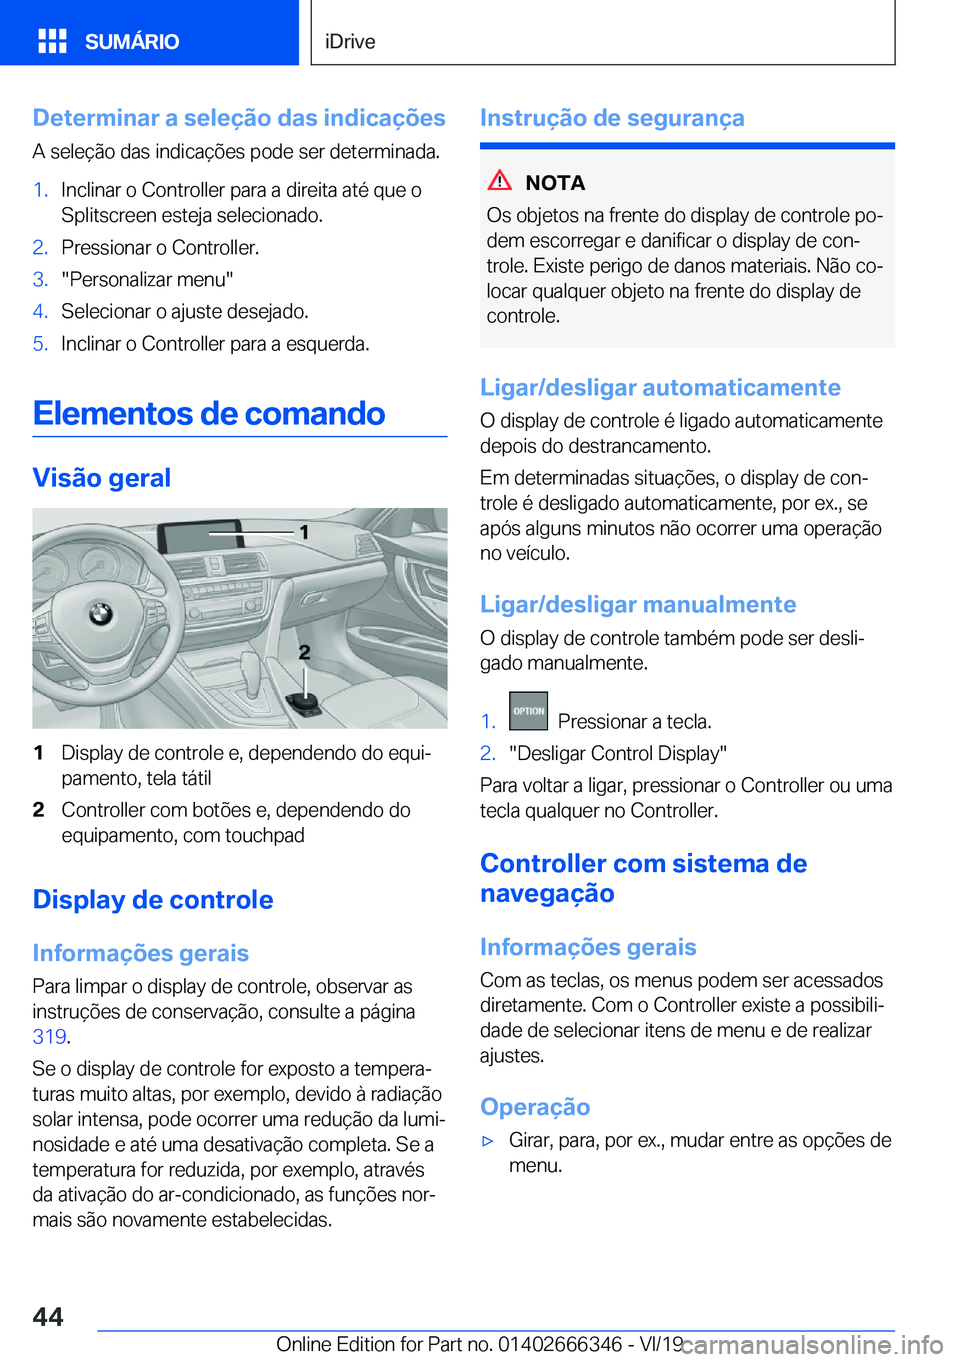 BMW 4 SERIES COUPE 2020  Manual do condutor (in Portuguese) �D�e�t�e�r�m�i�n�a�r��a��s�e�l�e�